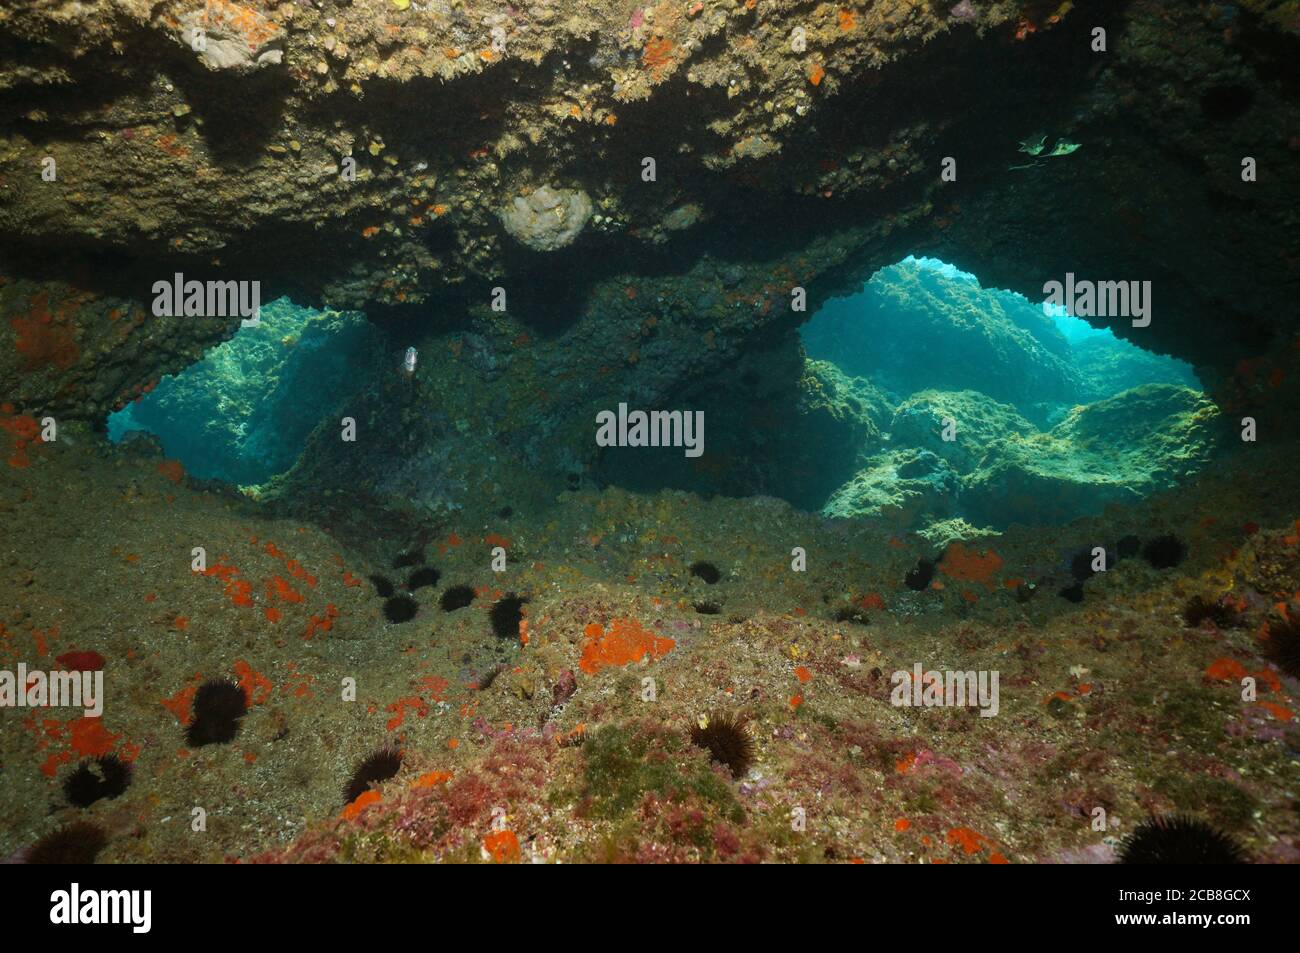 Openings inside a sea cave underwater in the Mediterranean sea, Spain, Costa Brava, Catalonia Stock Photo